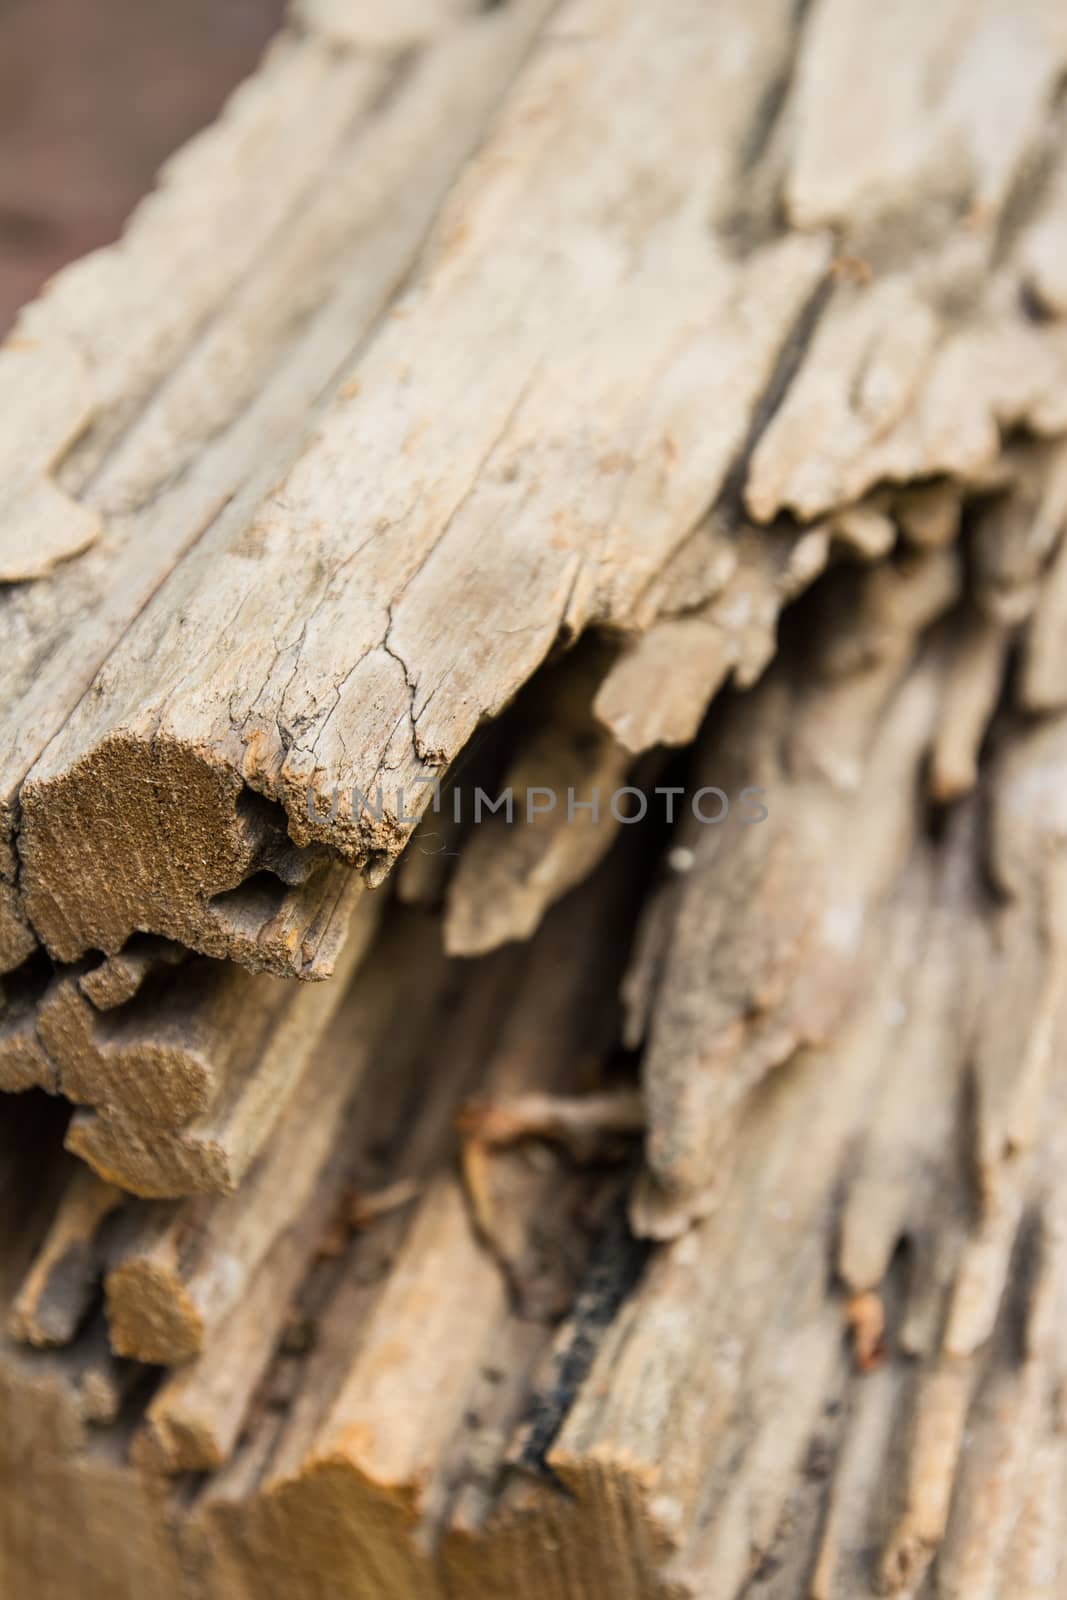 Cracked log wood by kasinv